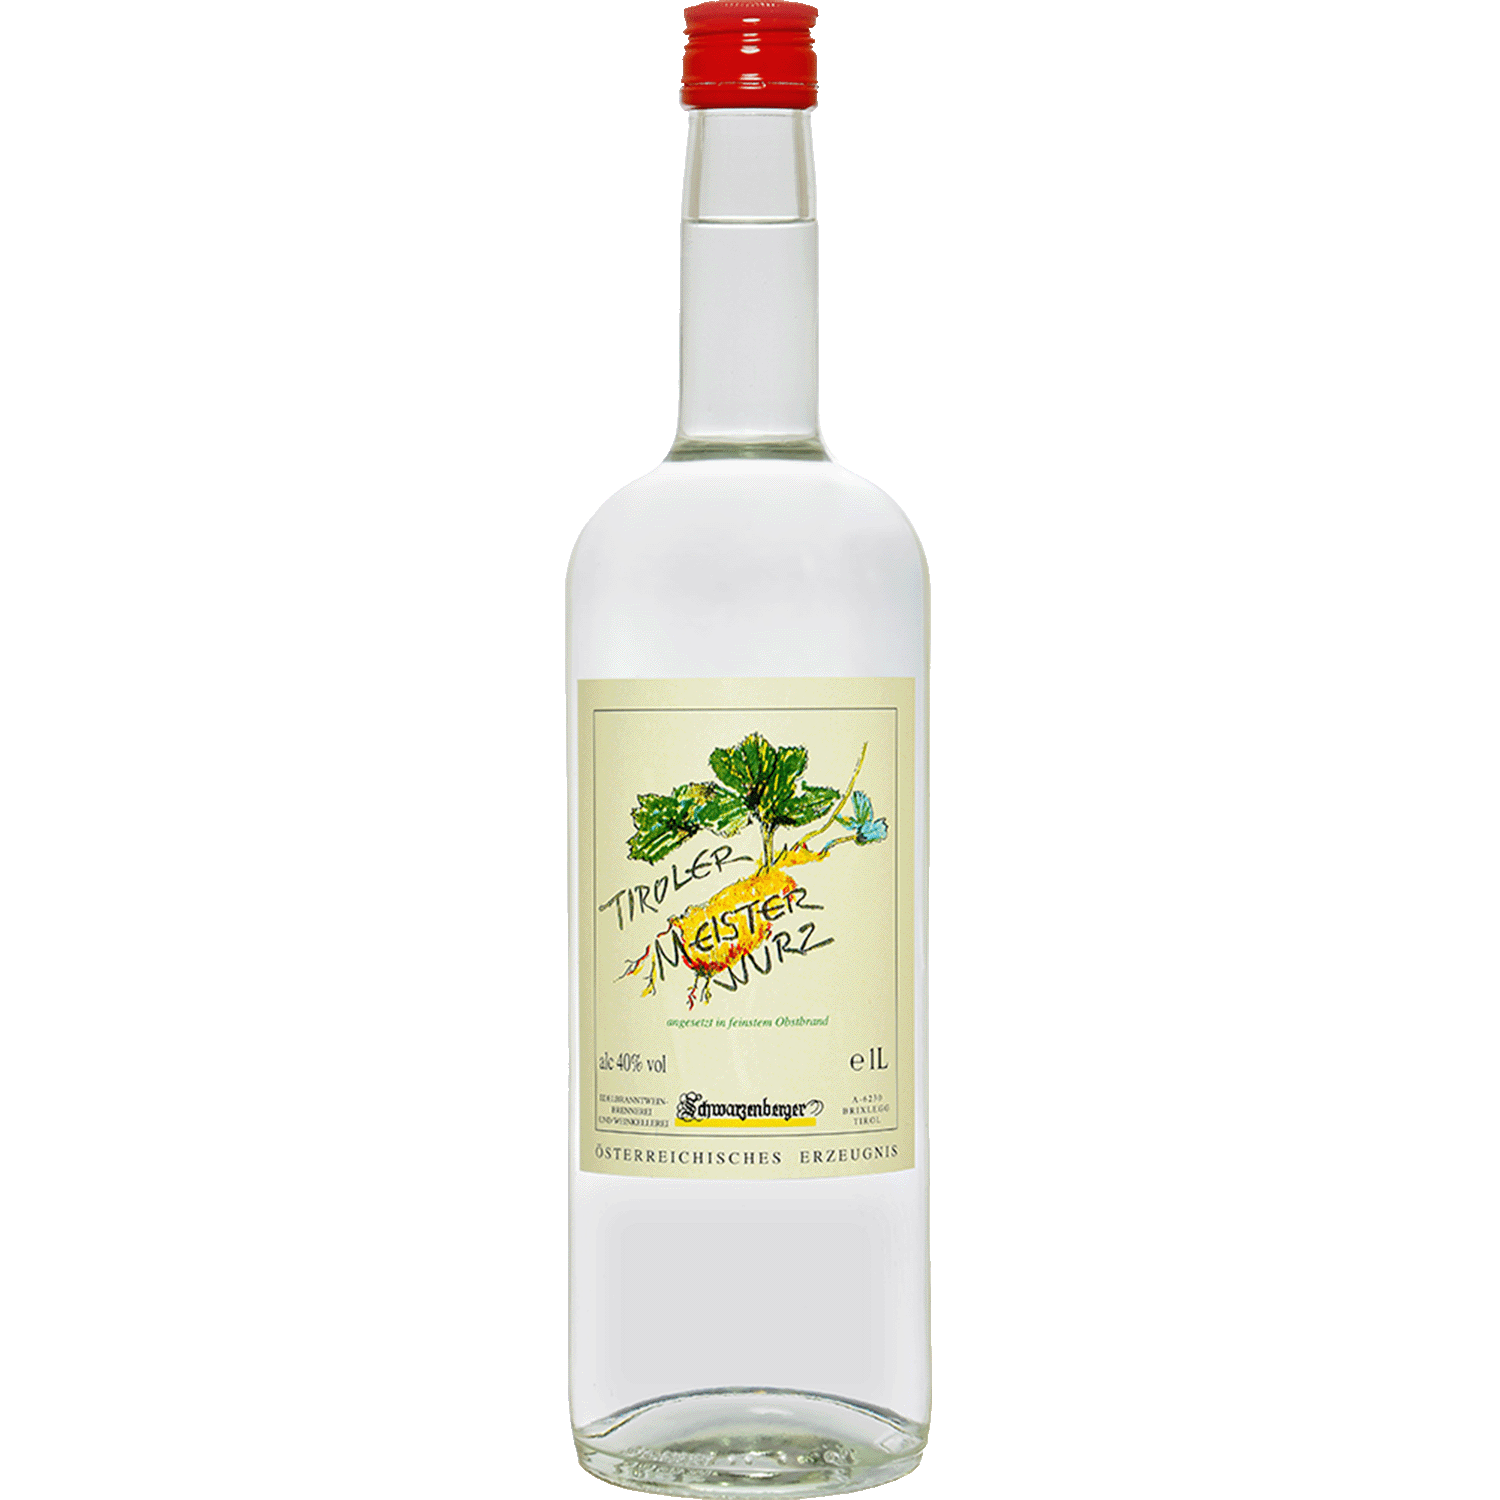 Tyrolean Masterwort Spirit in 1l bottle by Edelbrennerei Schwarzenberger